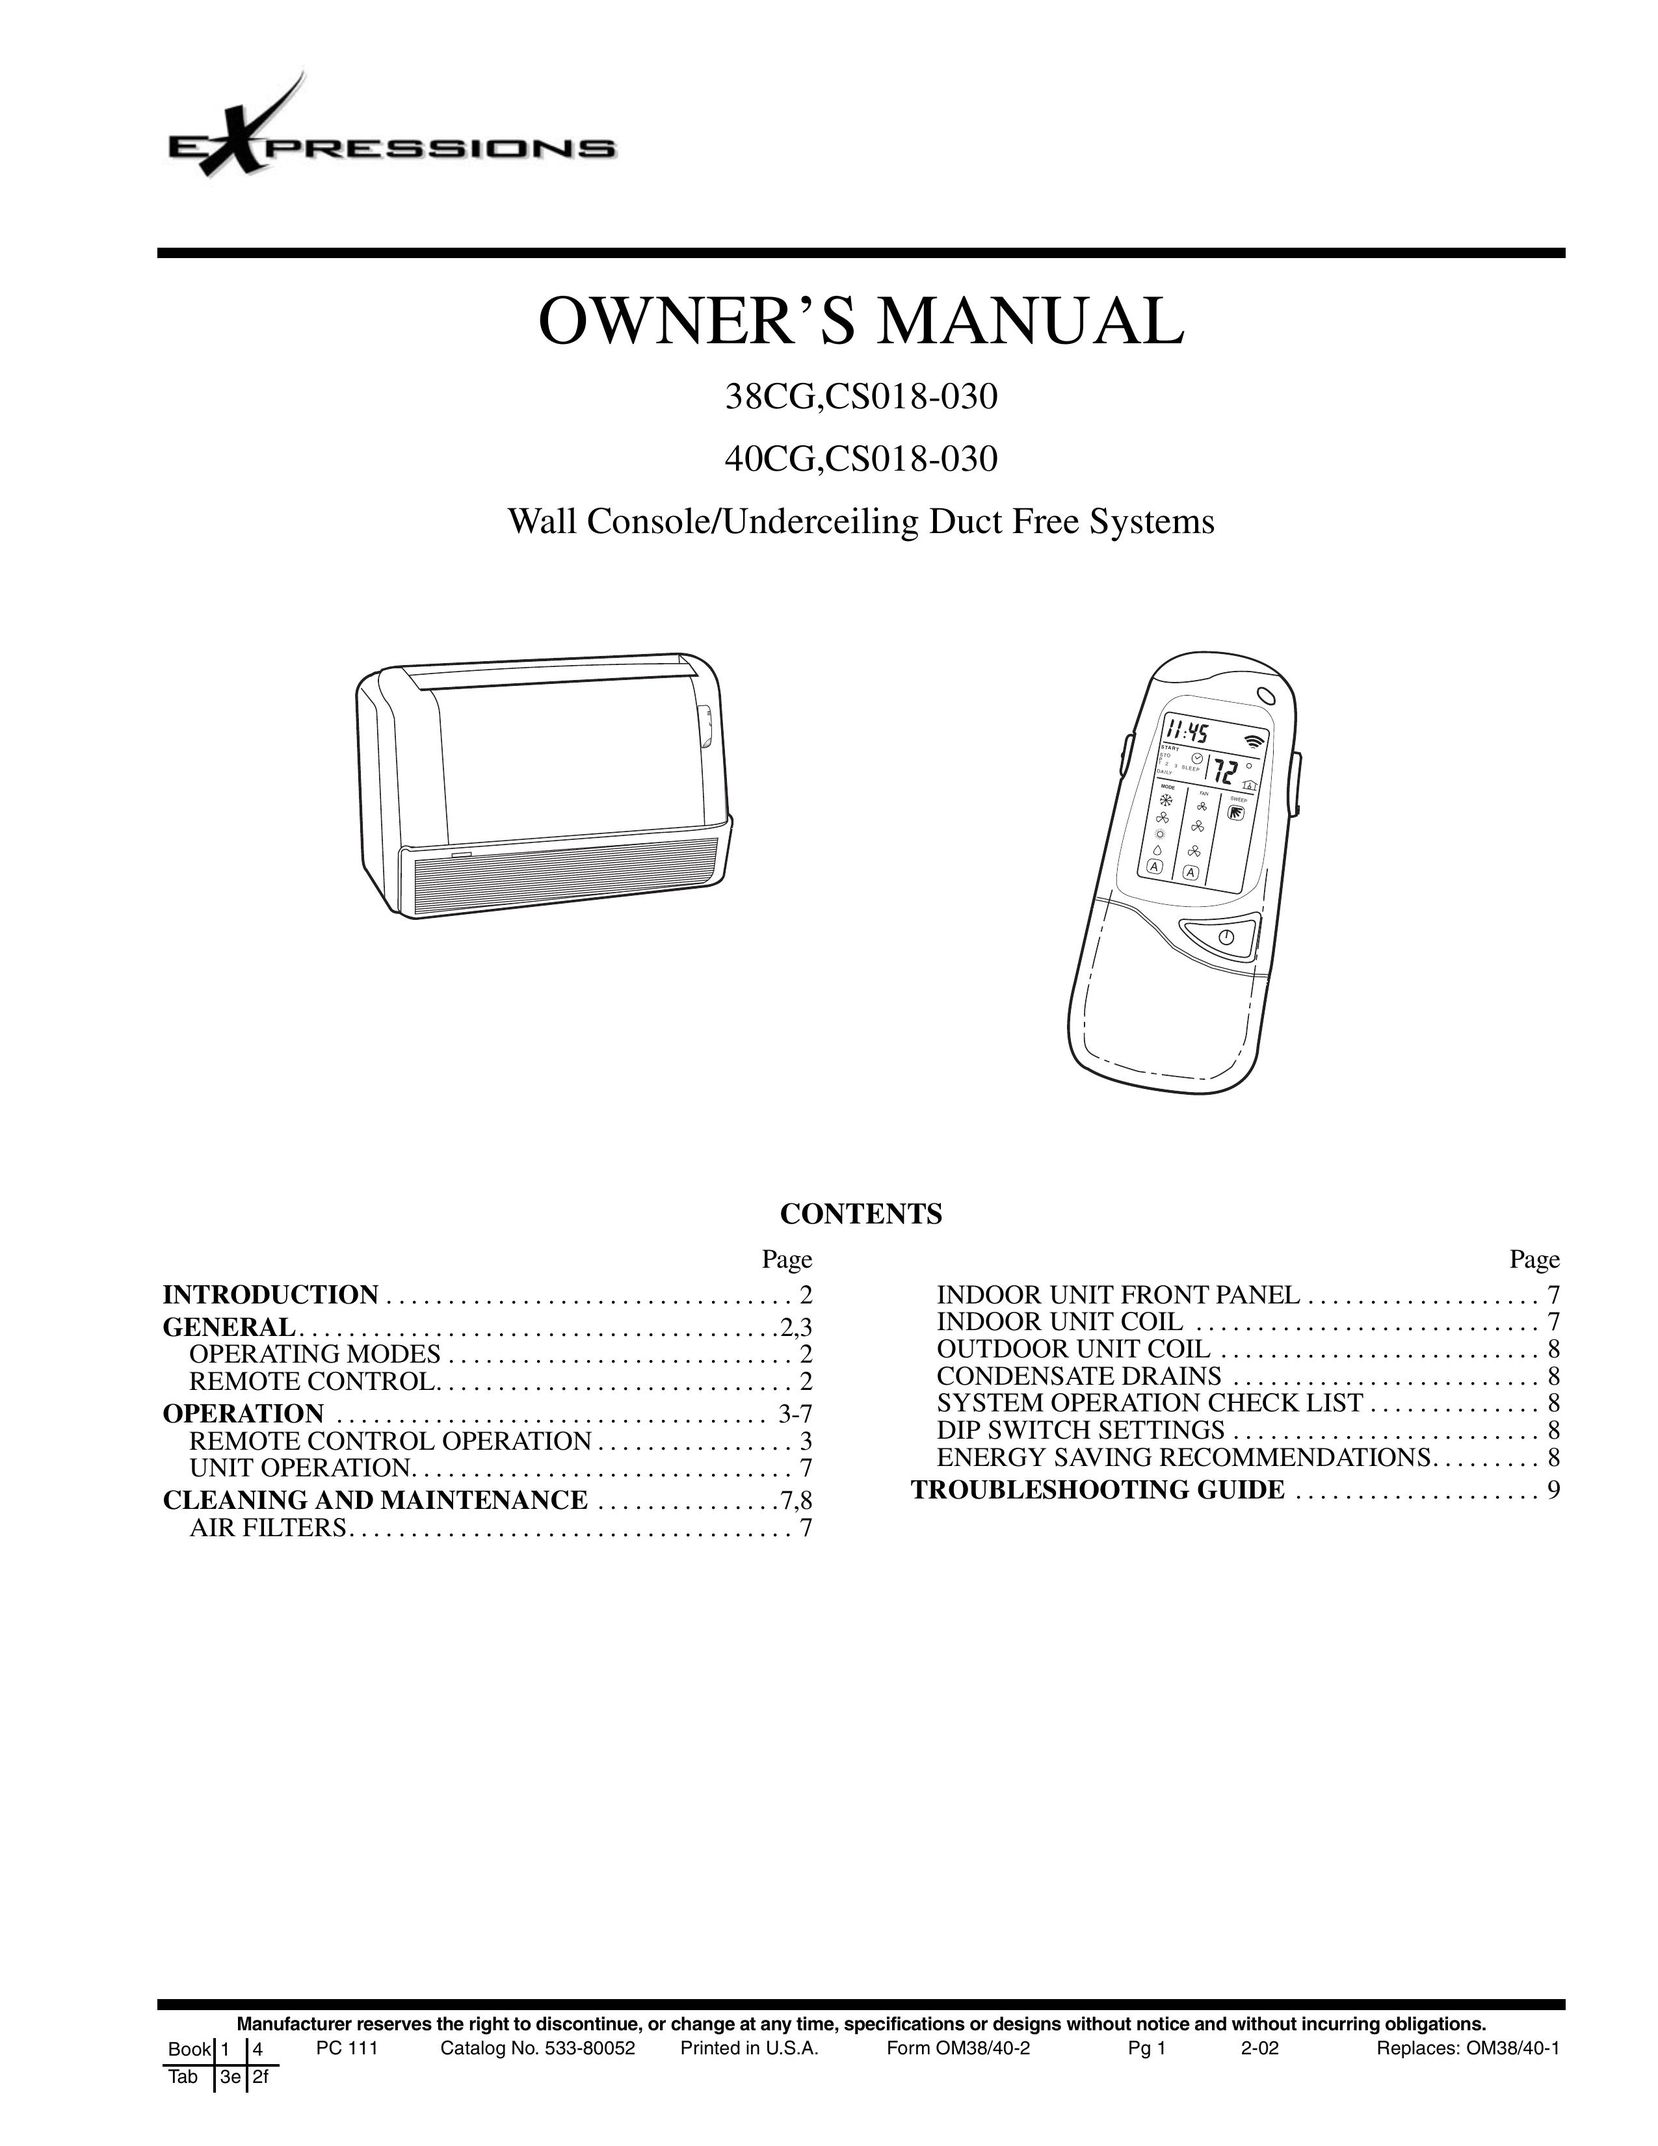 Computer Expressions CS018-030 Air Conditioner User Manual